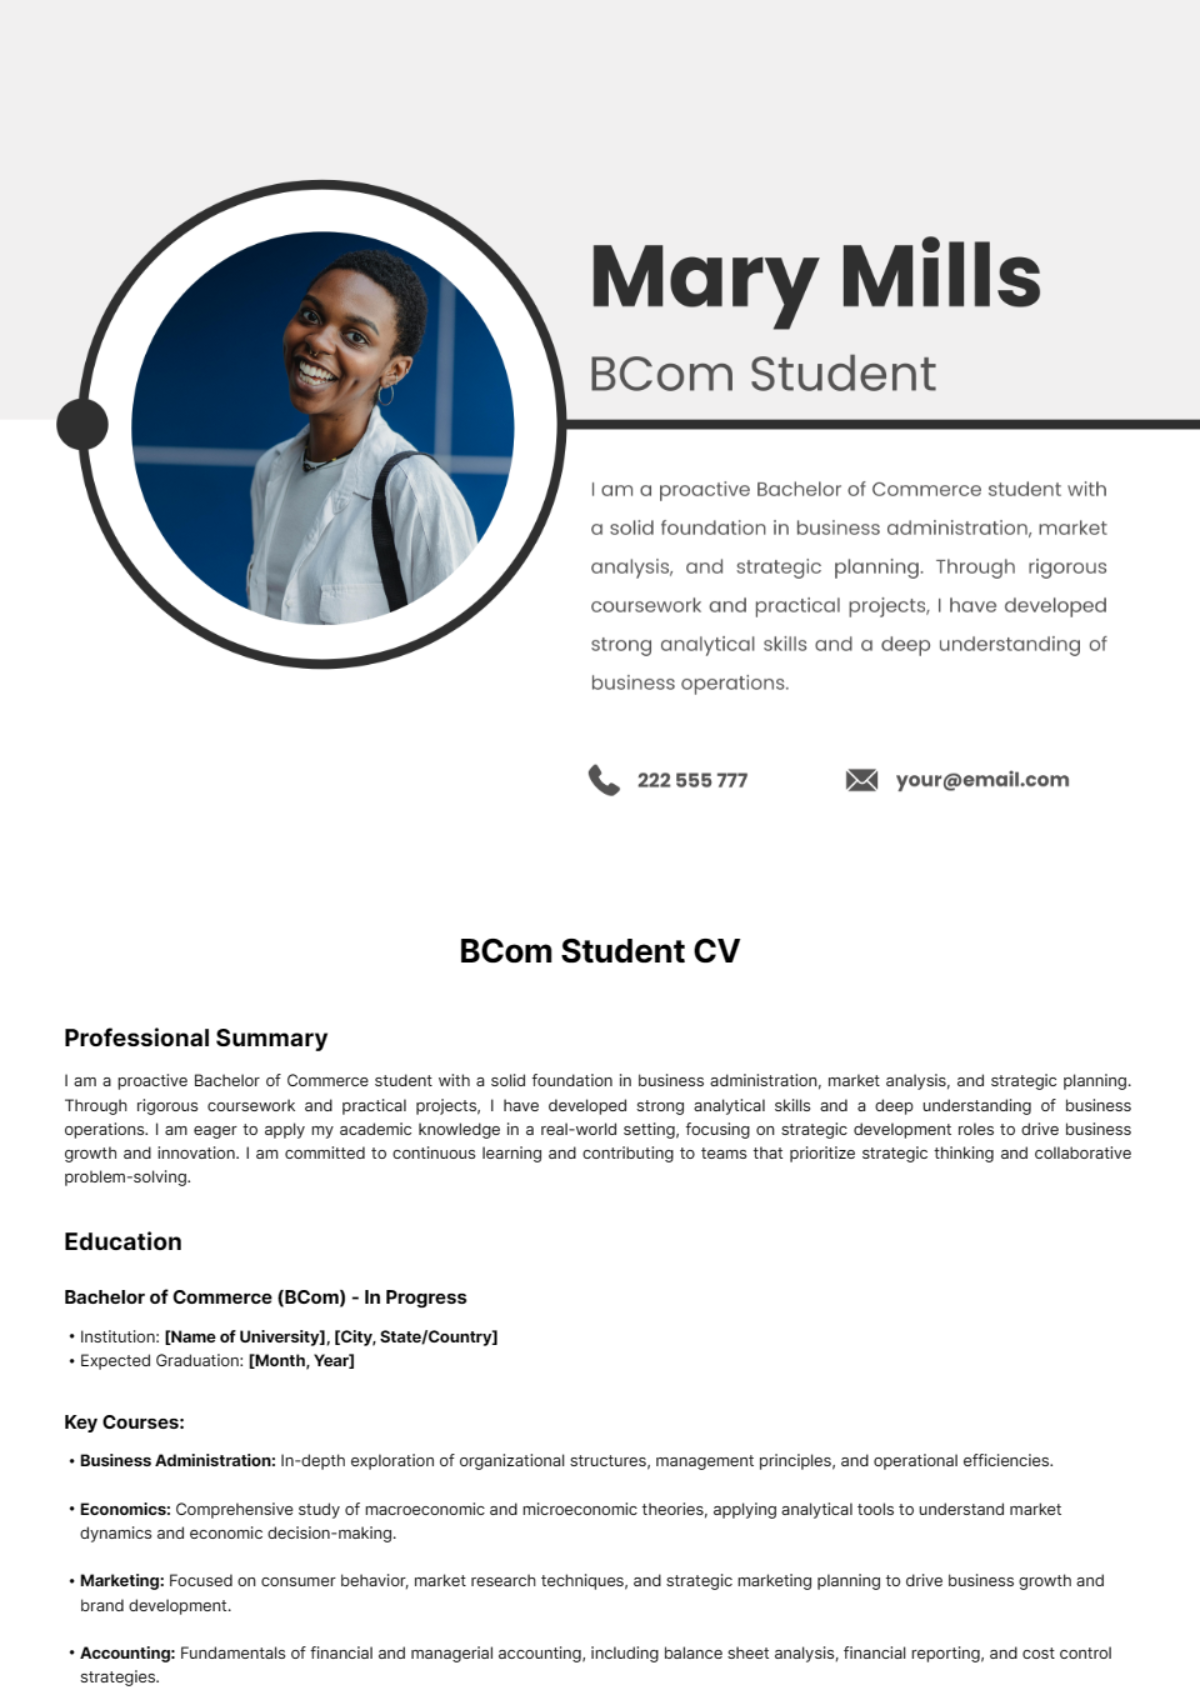 Free BCom Student CV Template